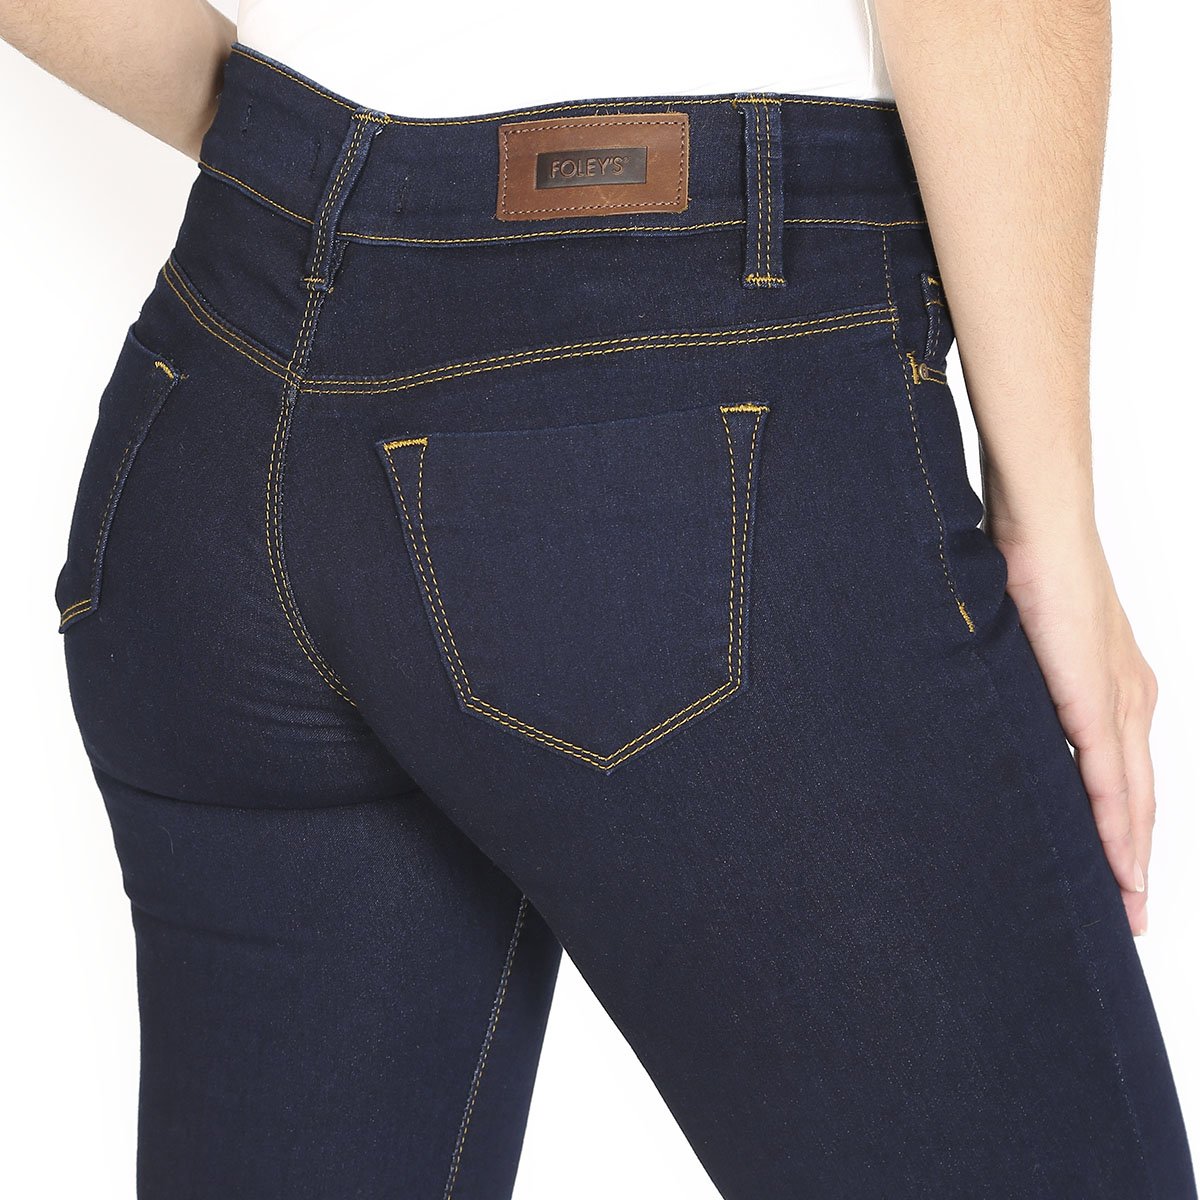 Jeans Corte Skinny Foley's